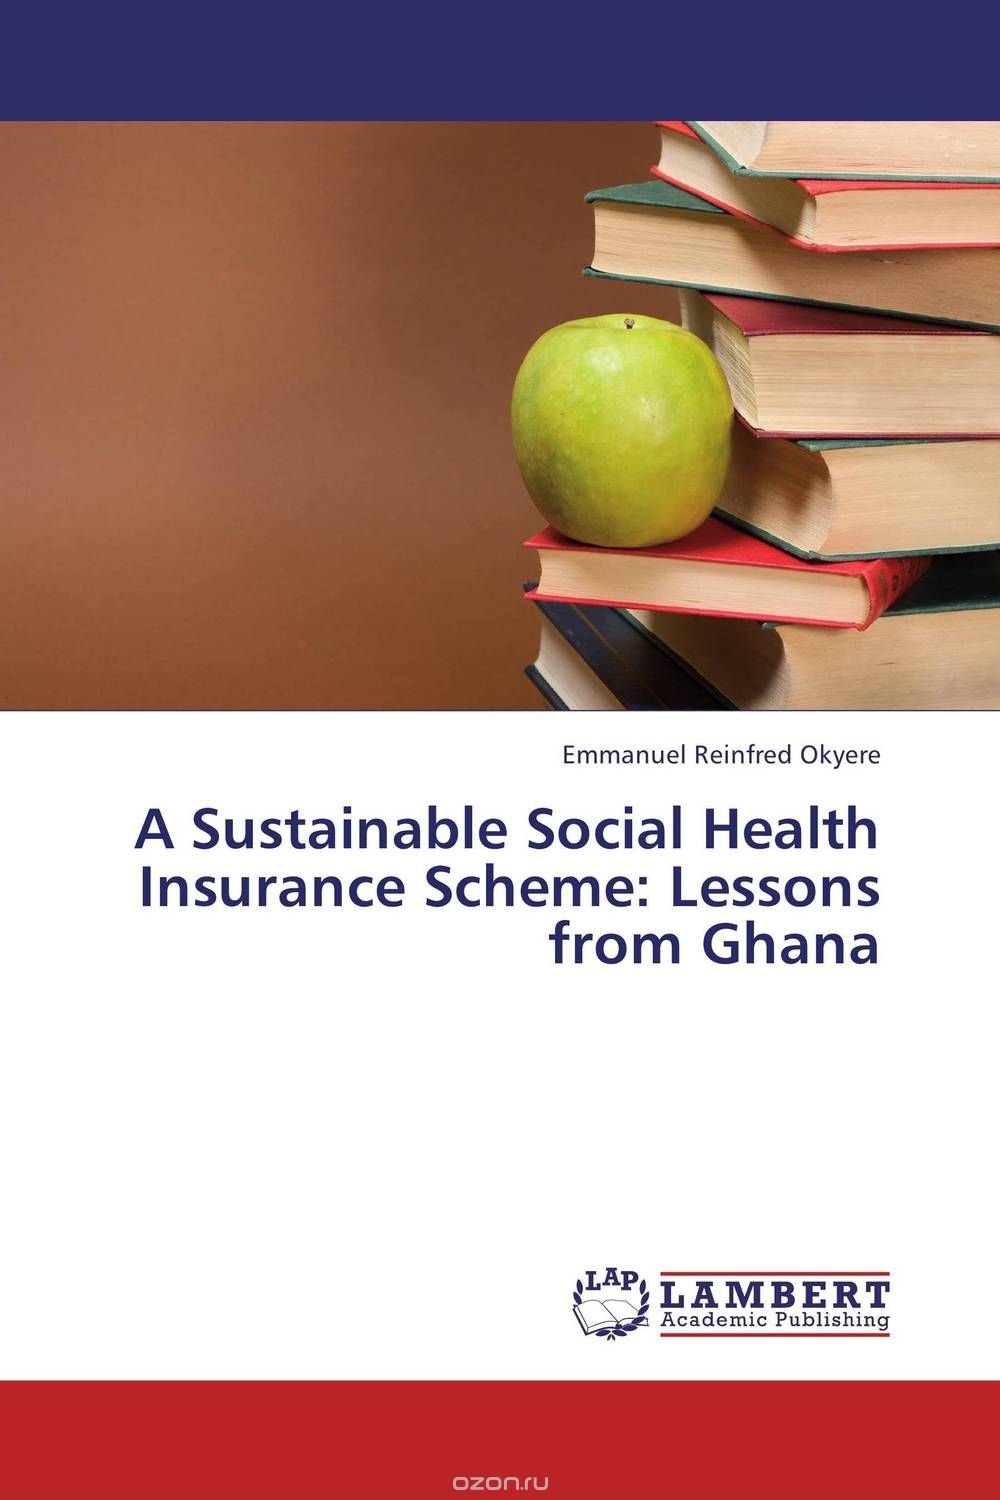 Скачать книгу "A Sustainable Social Health Insurance Scheme: Lessons from Ghana"